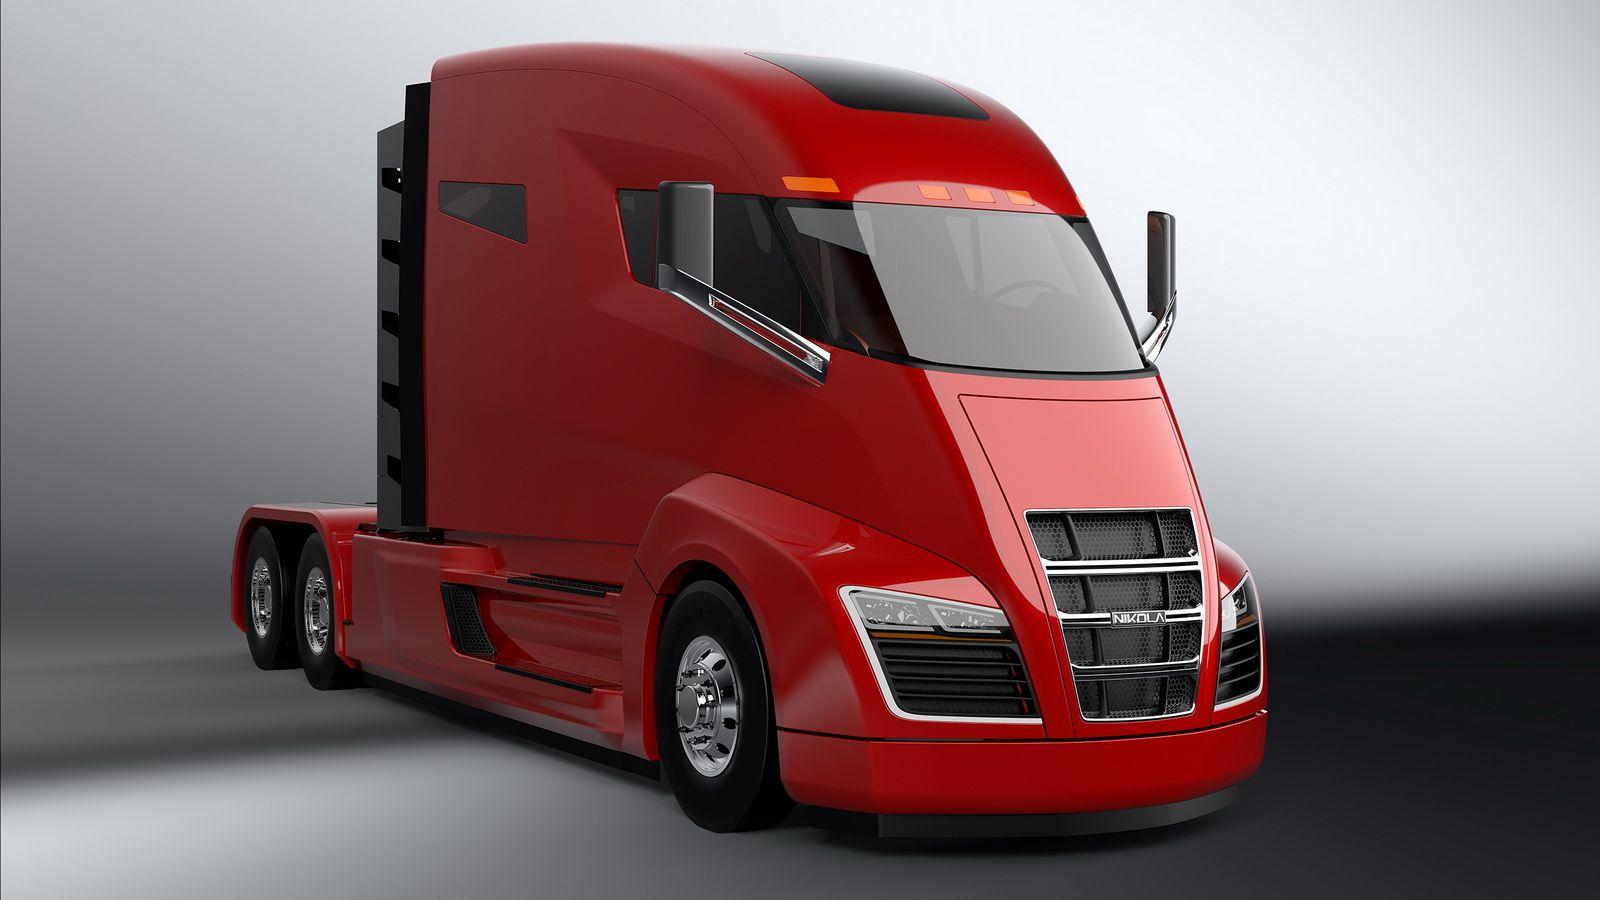 Nikola Motor Presents Electric Truck Concept With 200 Miles Range